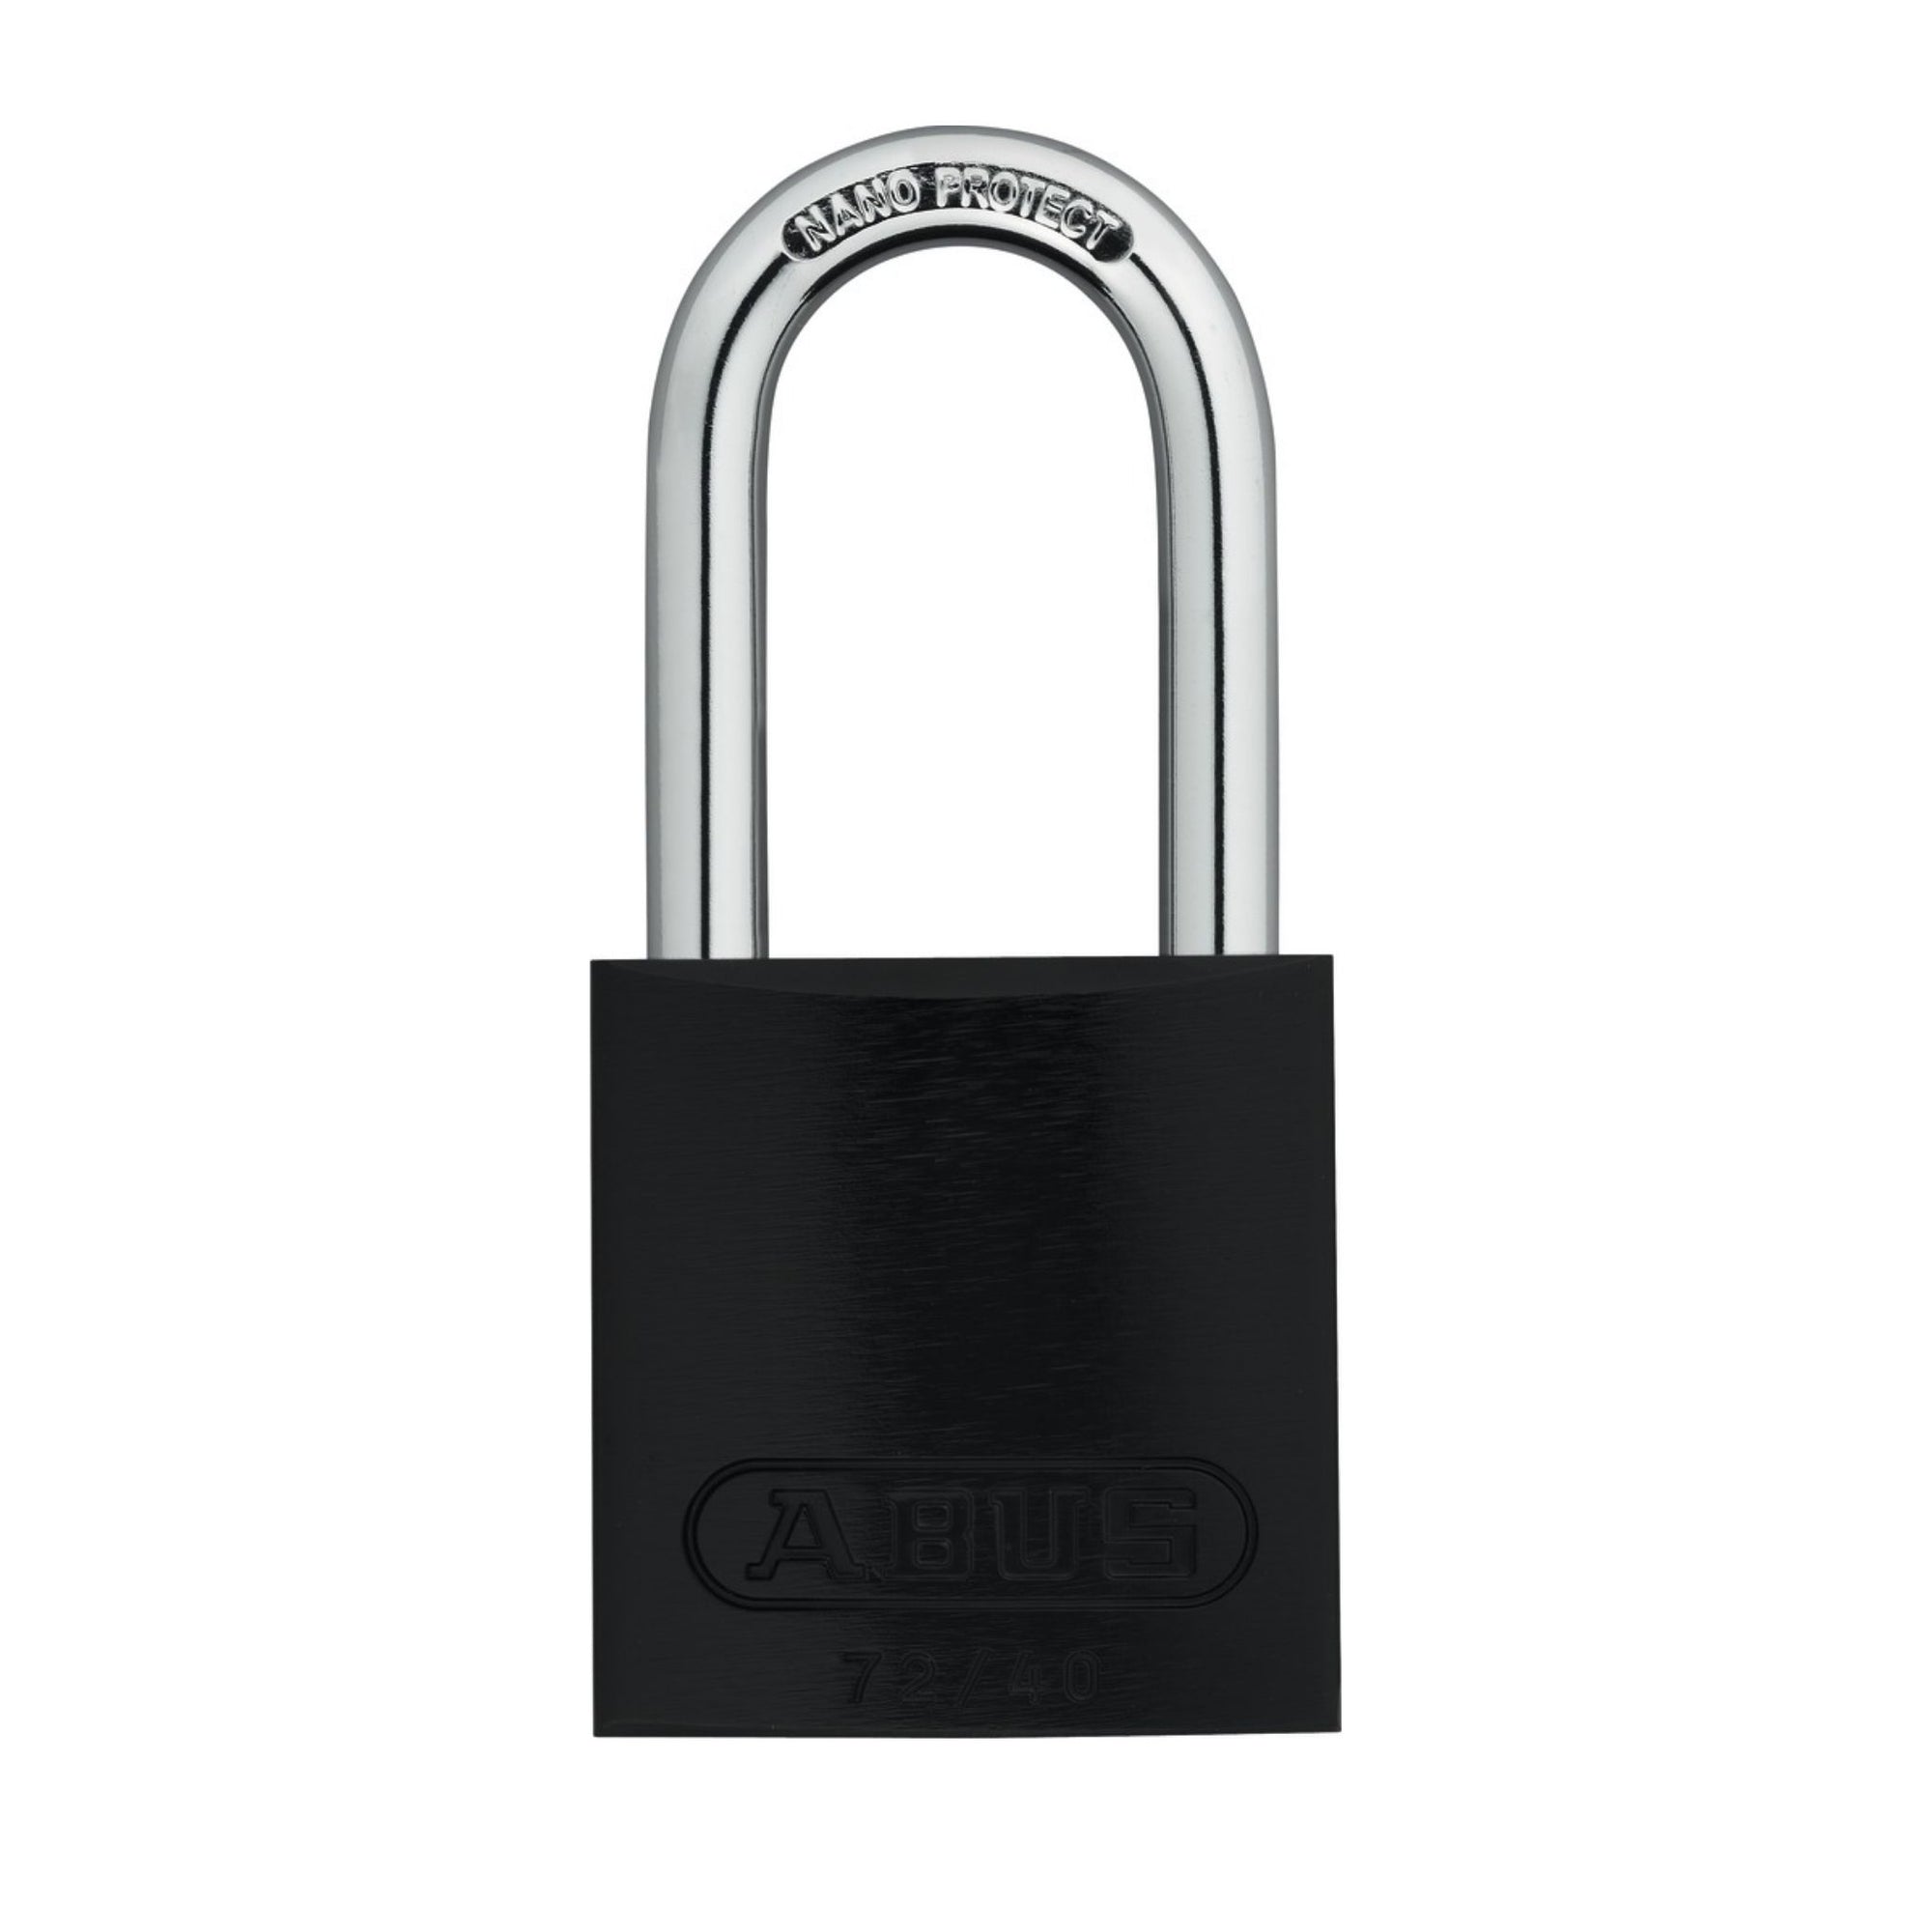 Abus 72/40HB40 KA TT00036 Black Titalium Safety Padlock with 1-1/2" Shackle, Keyed Alike to Match Existing Key Number KATT00036 - The Lock Source